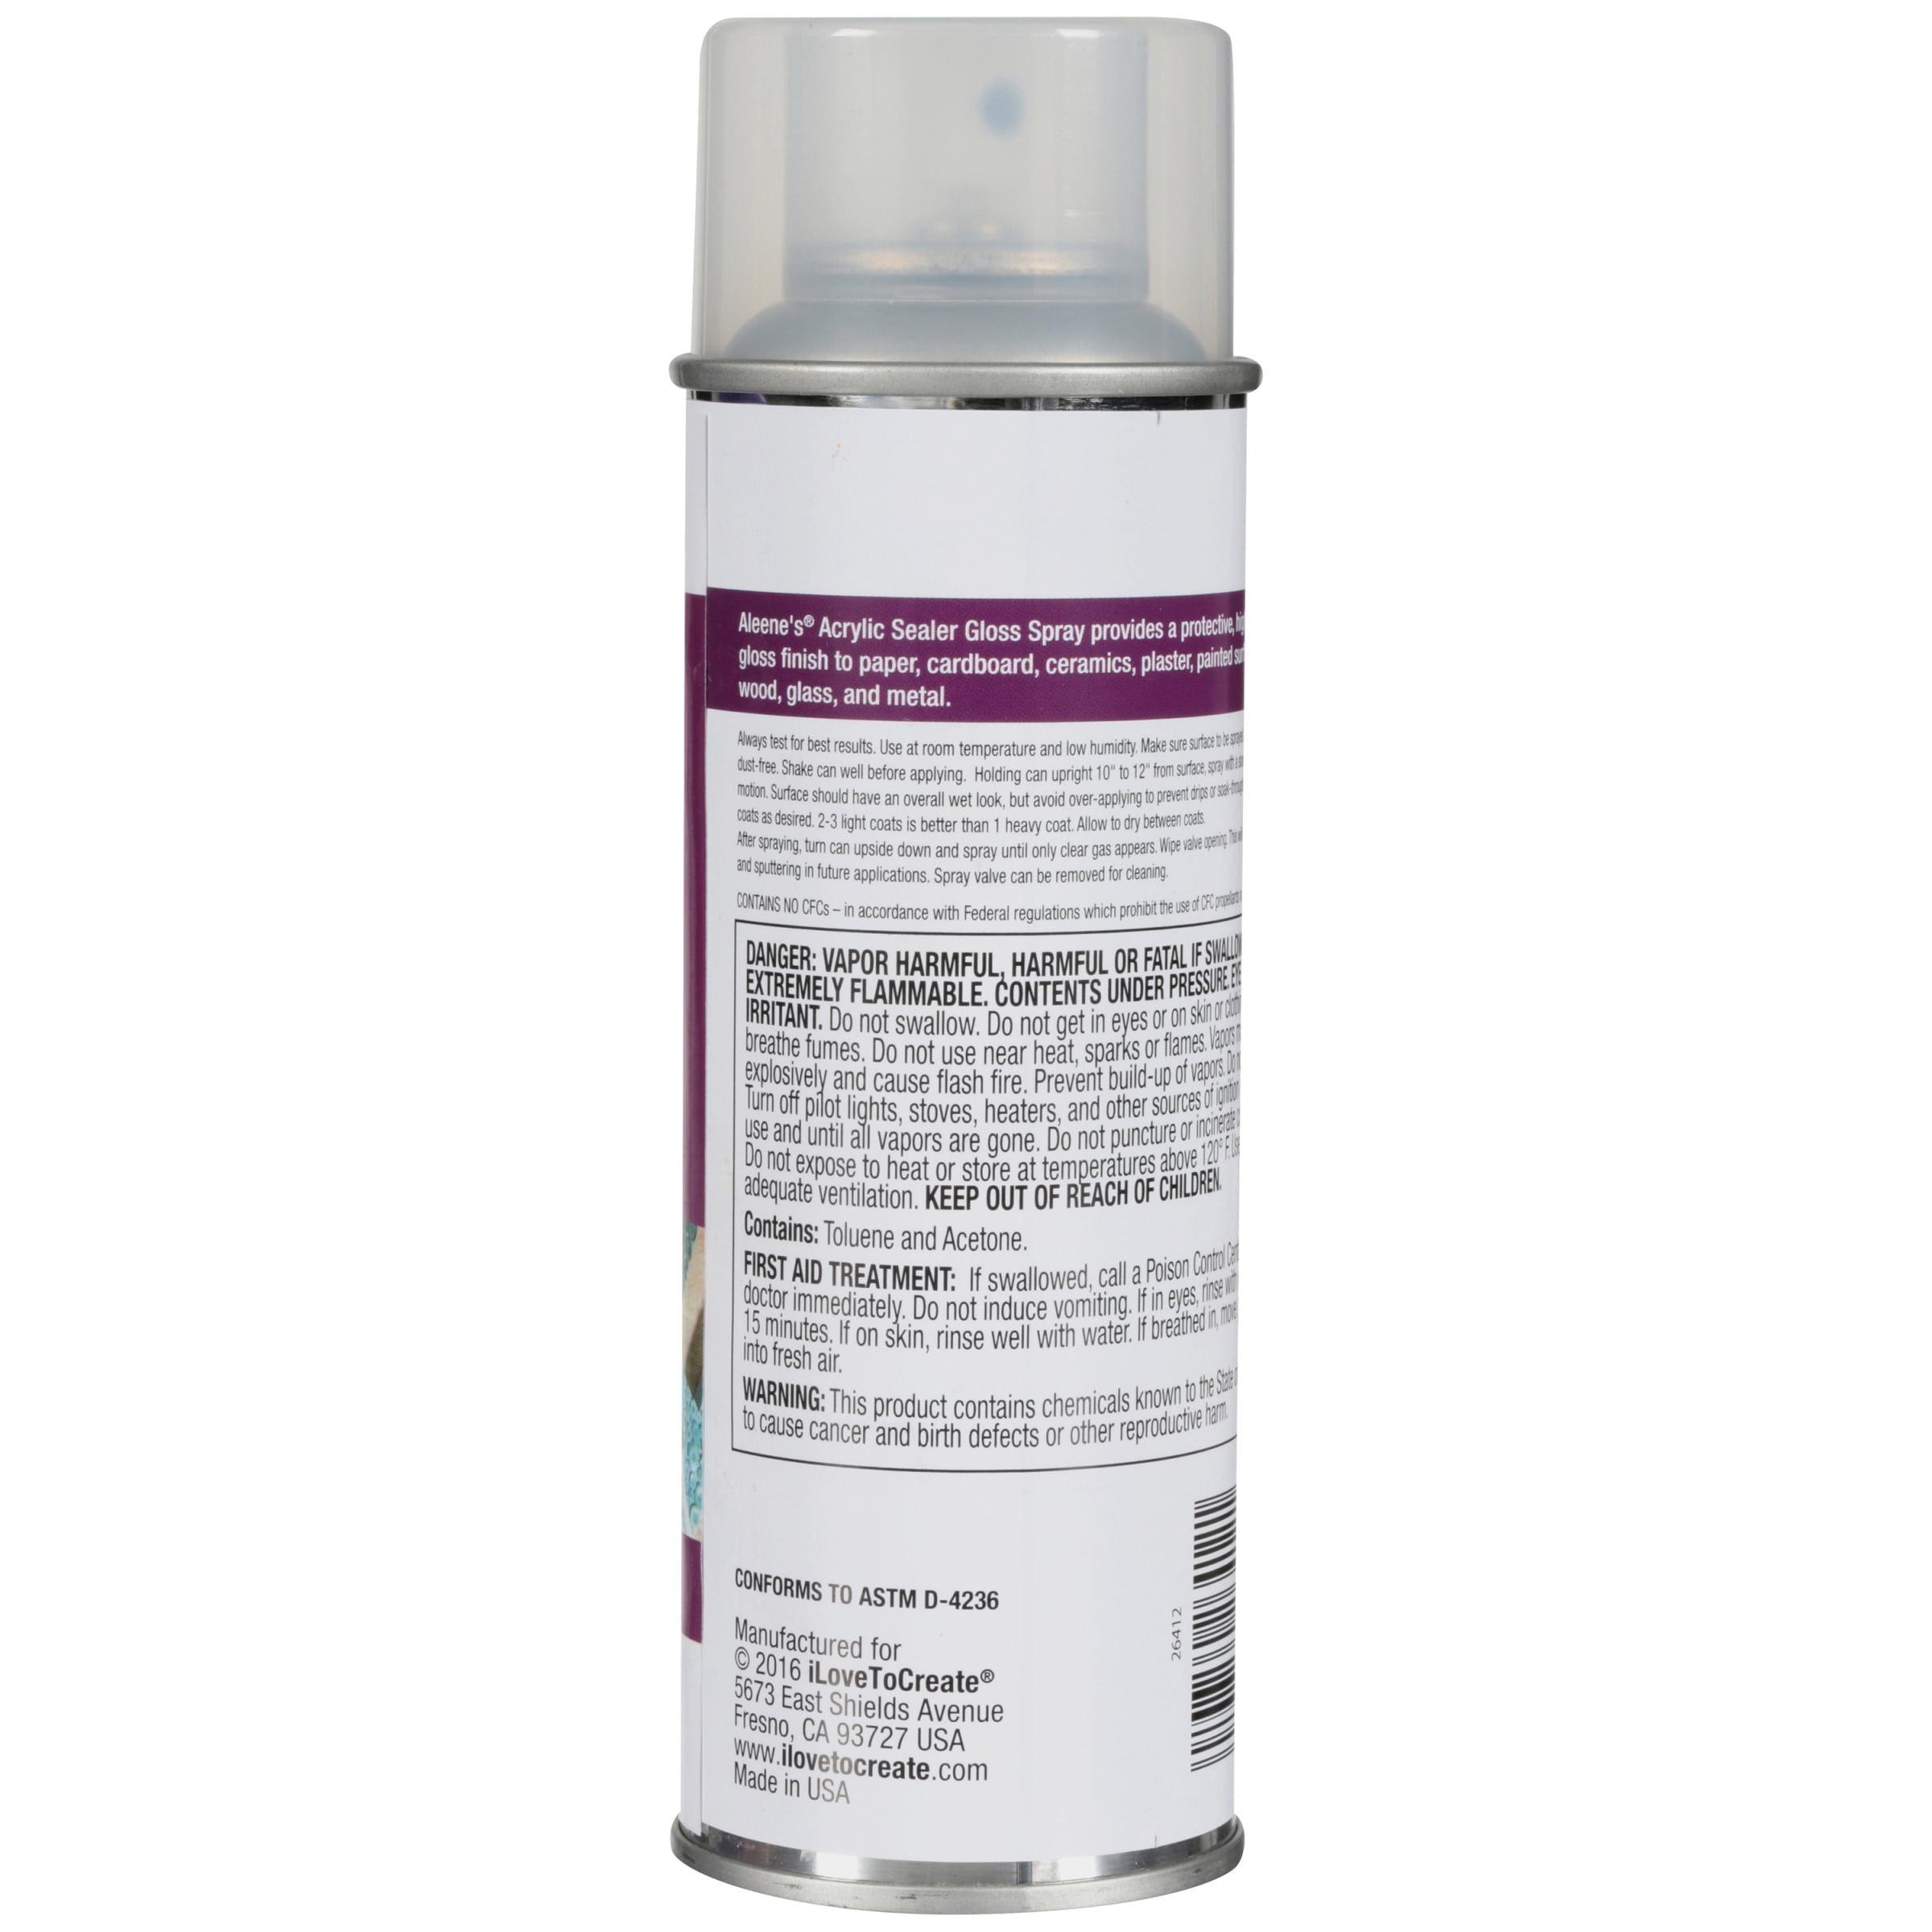 Aleene's 26412 Spray Gloss Finish, 6 Oz Acrylic Sealer, Original Version 